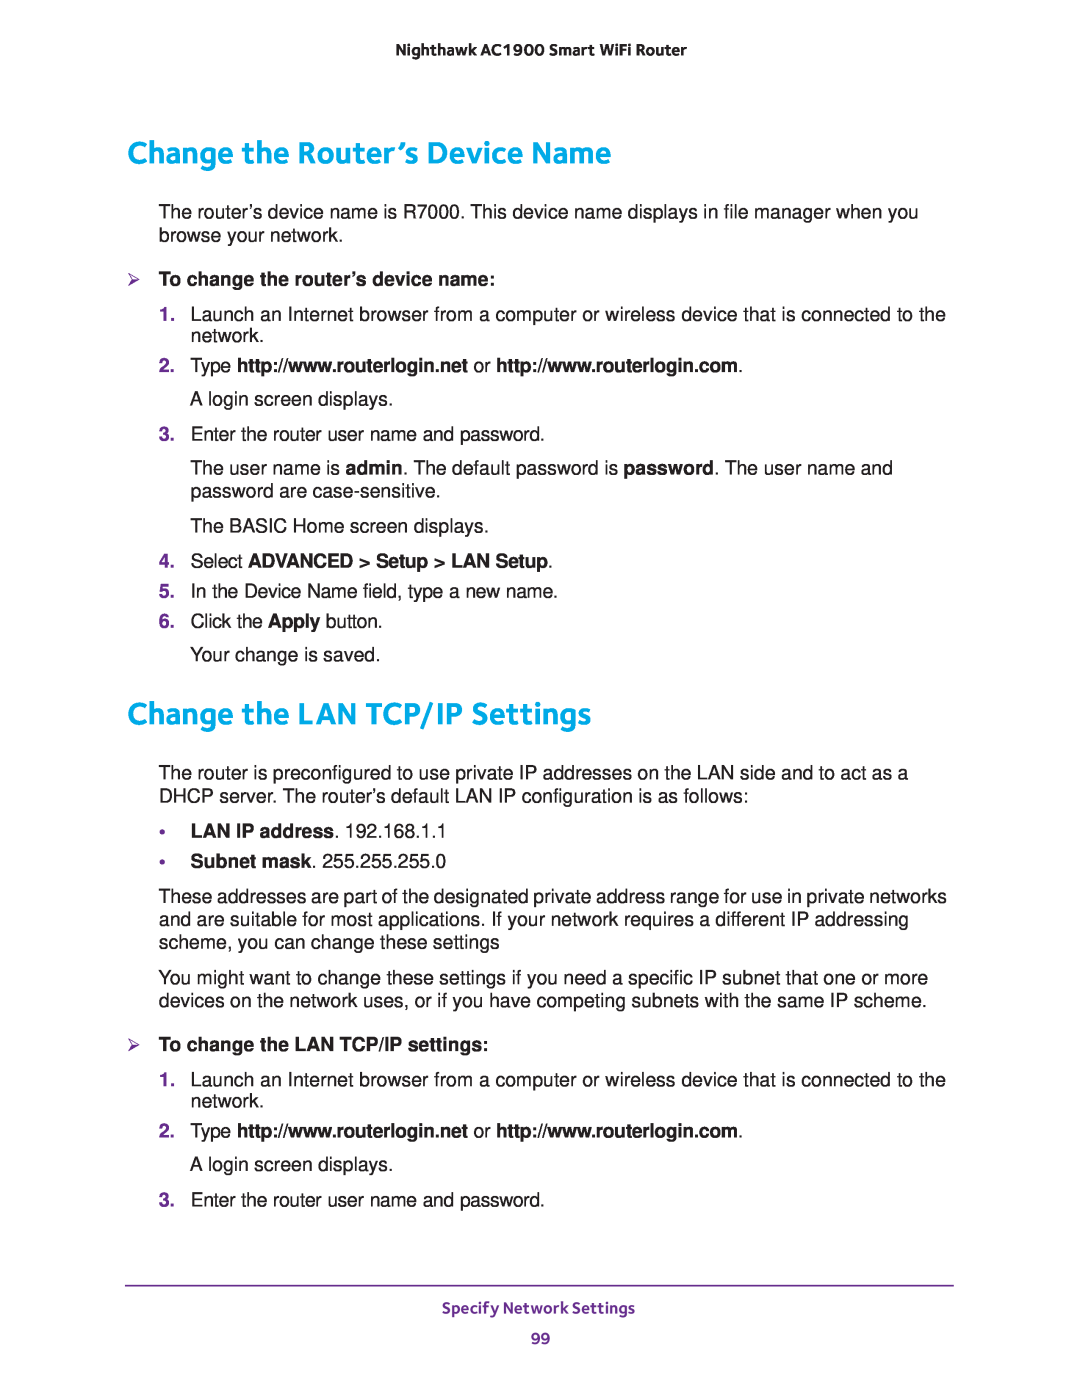 NETGEAR Model R7000 Change the Router’s Device Name, Change the LAN TCP/IP Settings,  To change the router’s device name 